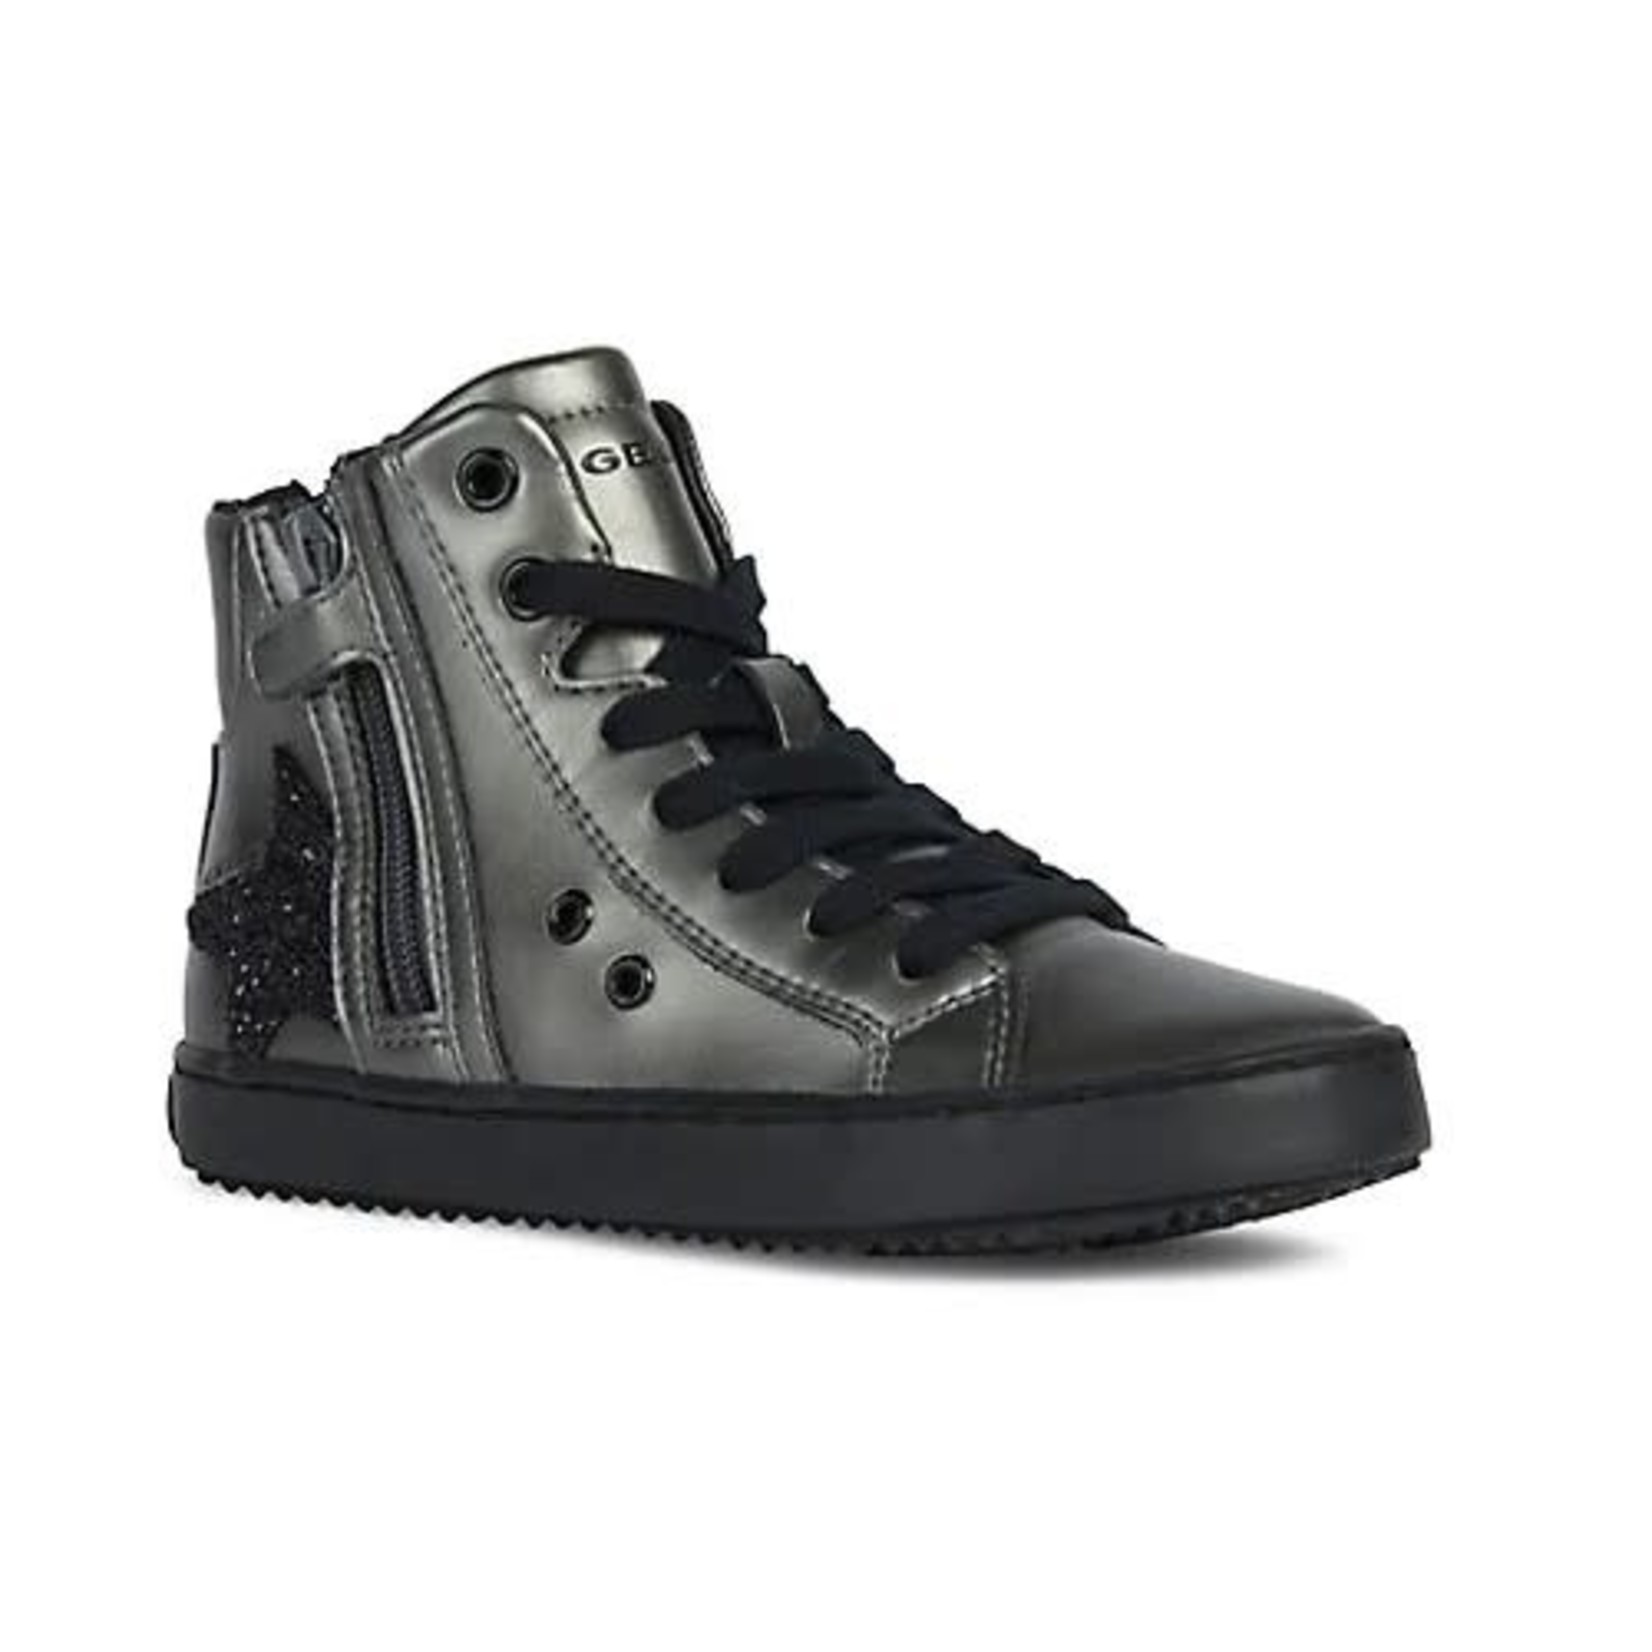 Geox GEOX - High Top Dark Grey with Star Print Shoes 'J Kalispera G. I.'